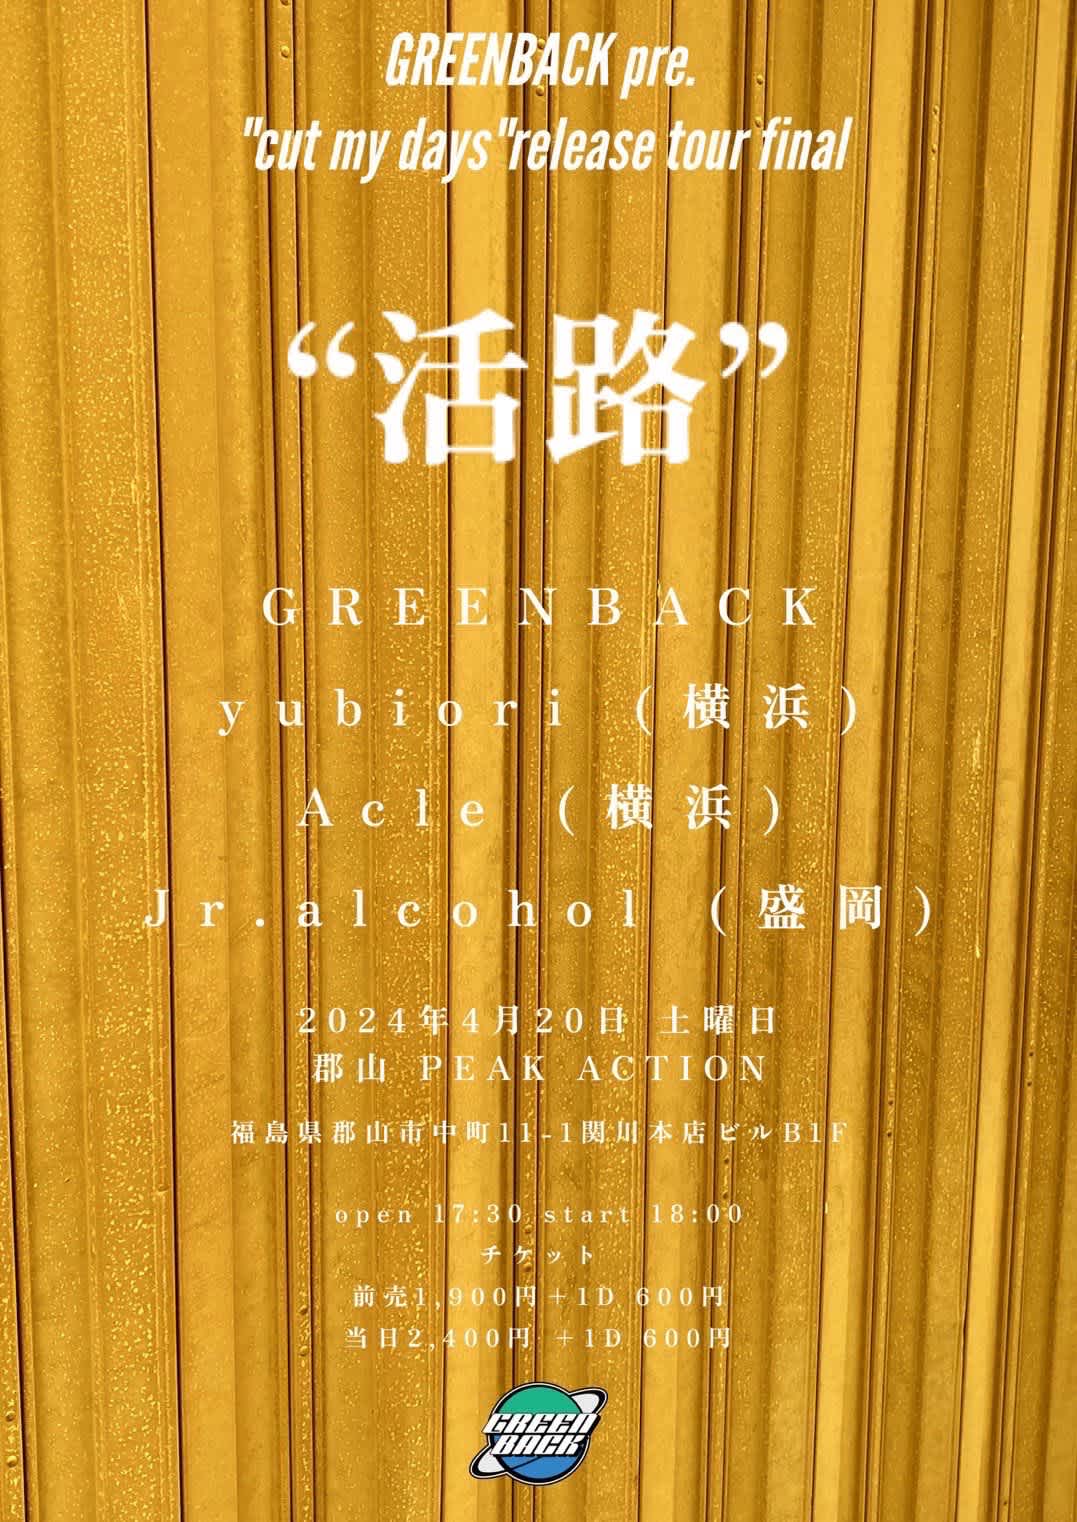 GREENBACK pre. "cut my days"release tour final「活路」のイメージ1